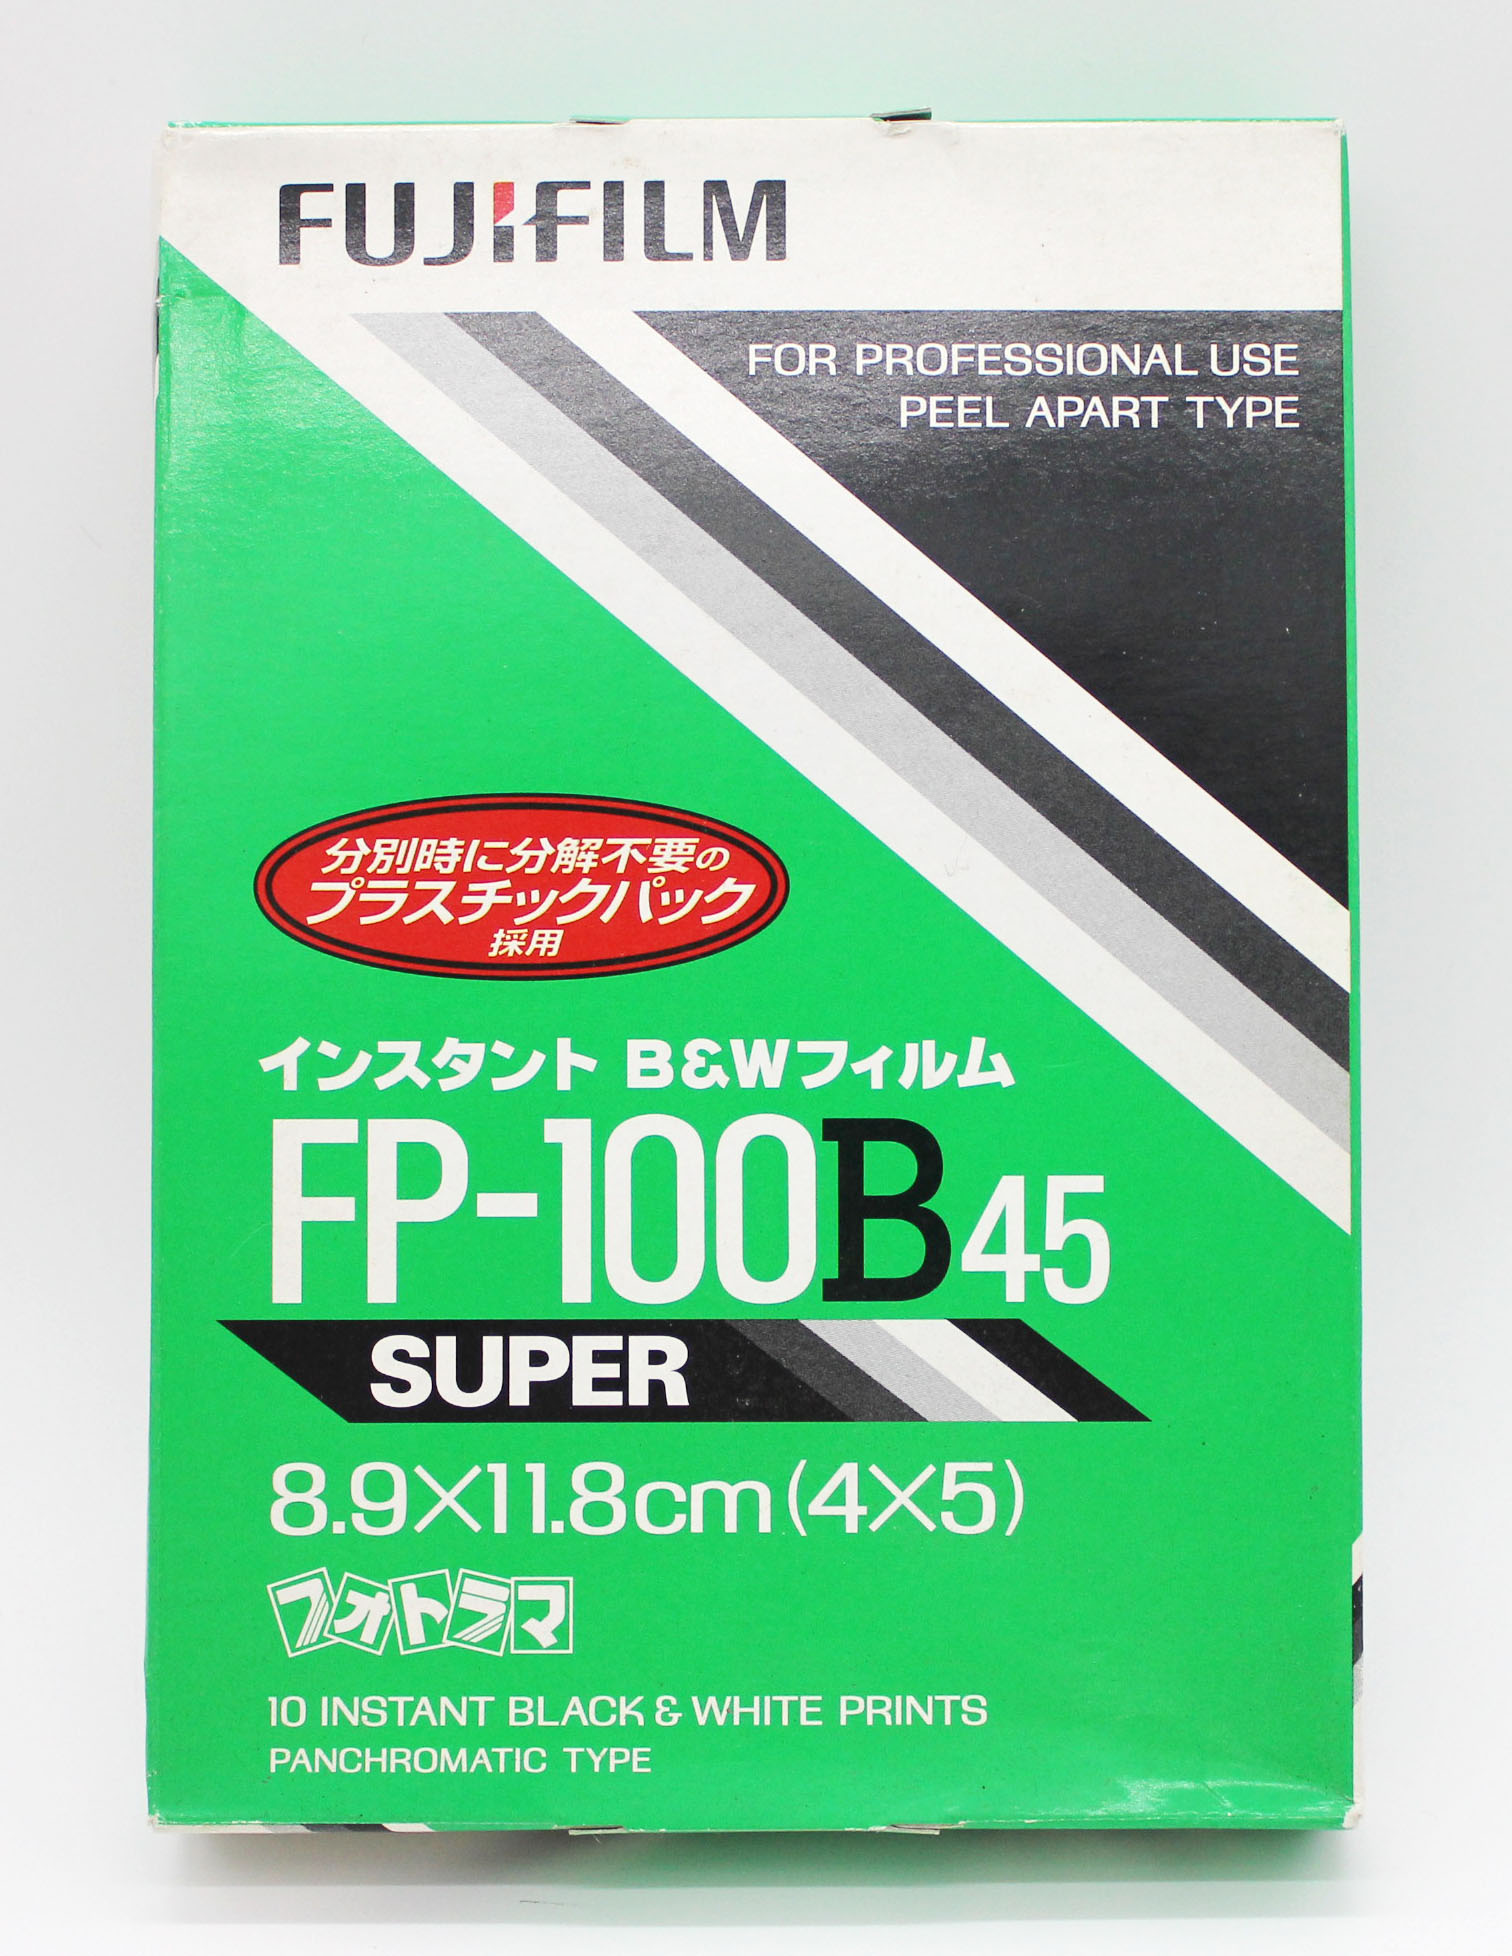 [New] Fuji Fujifilm FP-100B45 4x5 8.9x11.8cm Instant Black & White Film (EXP 6/2011)